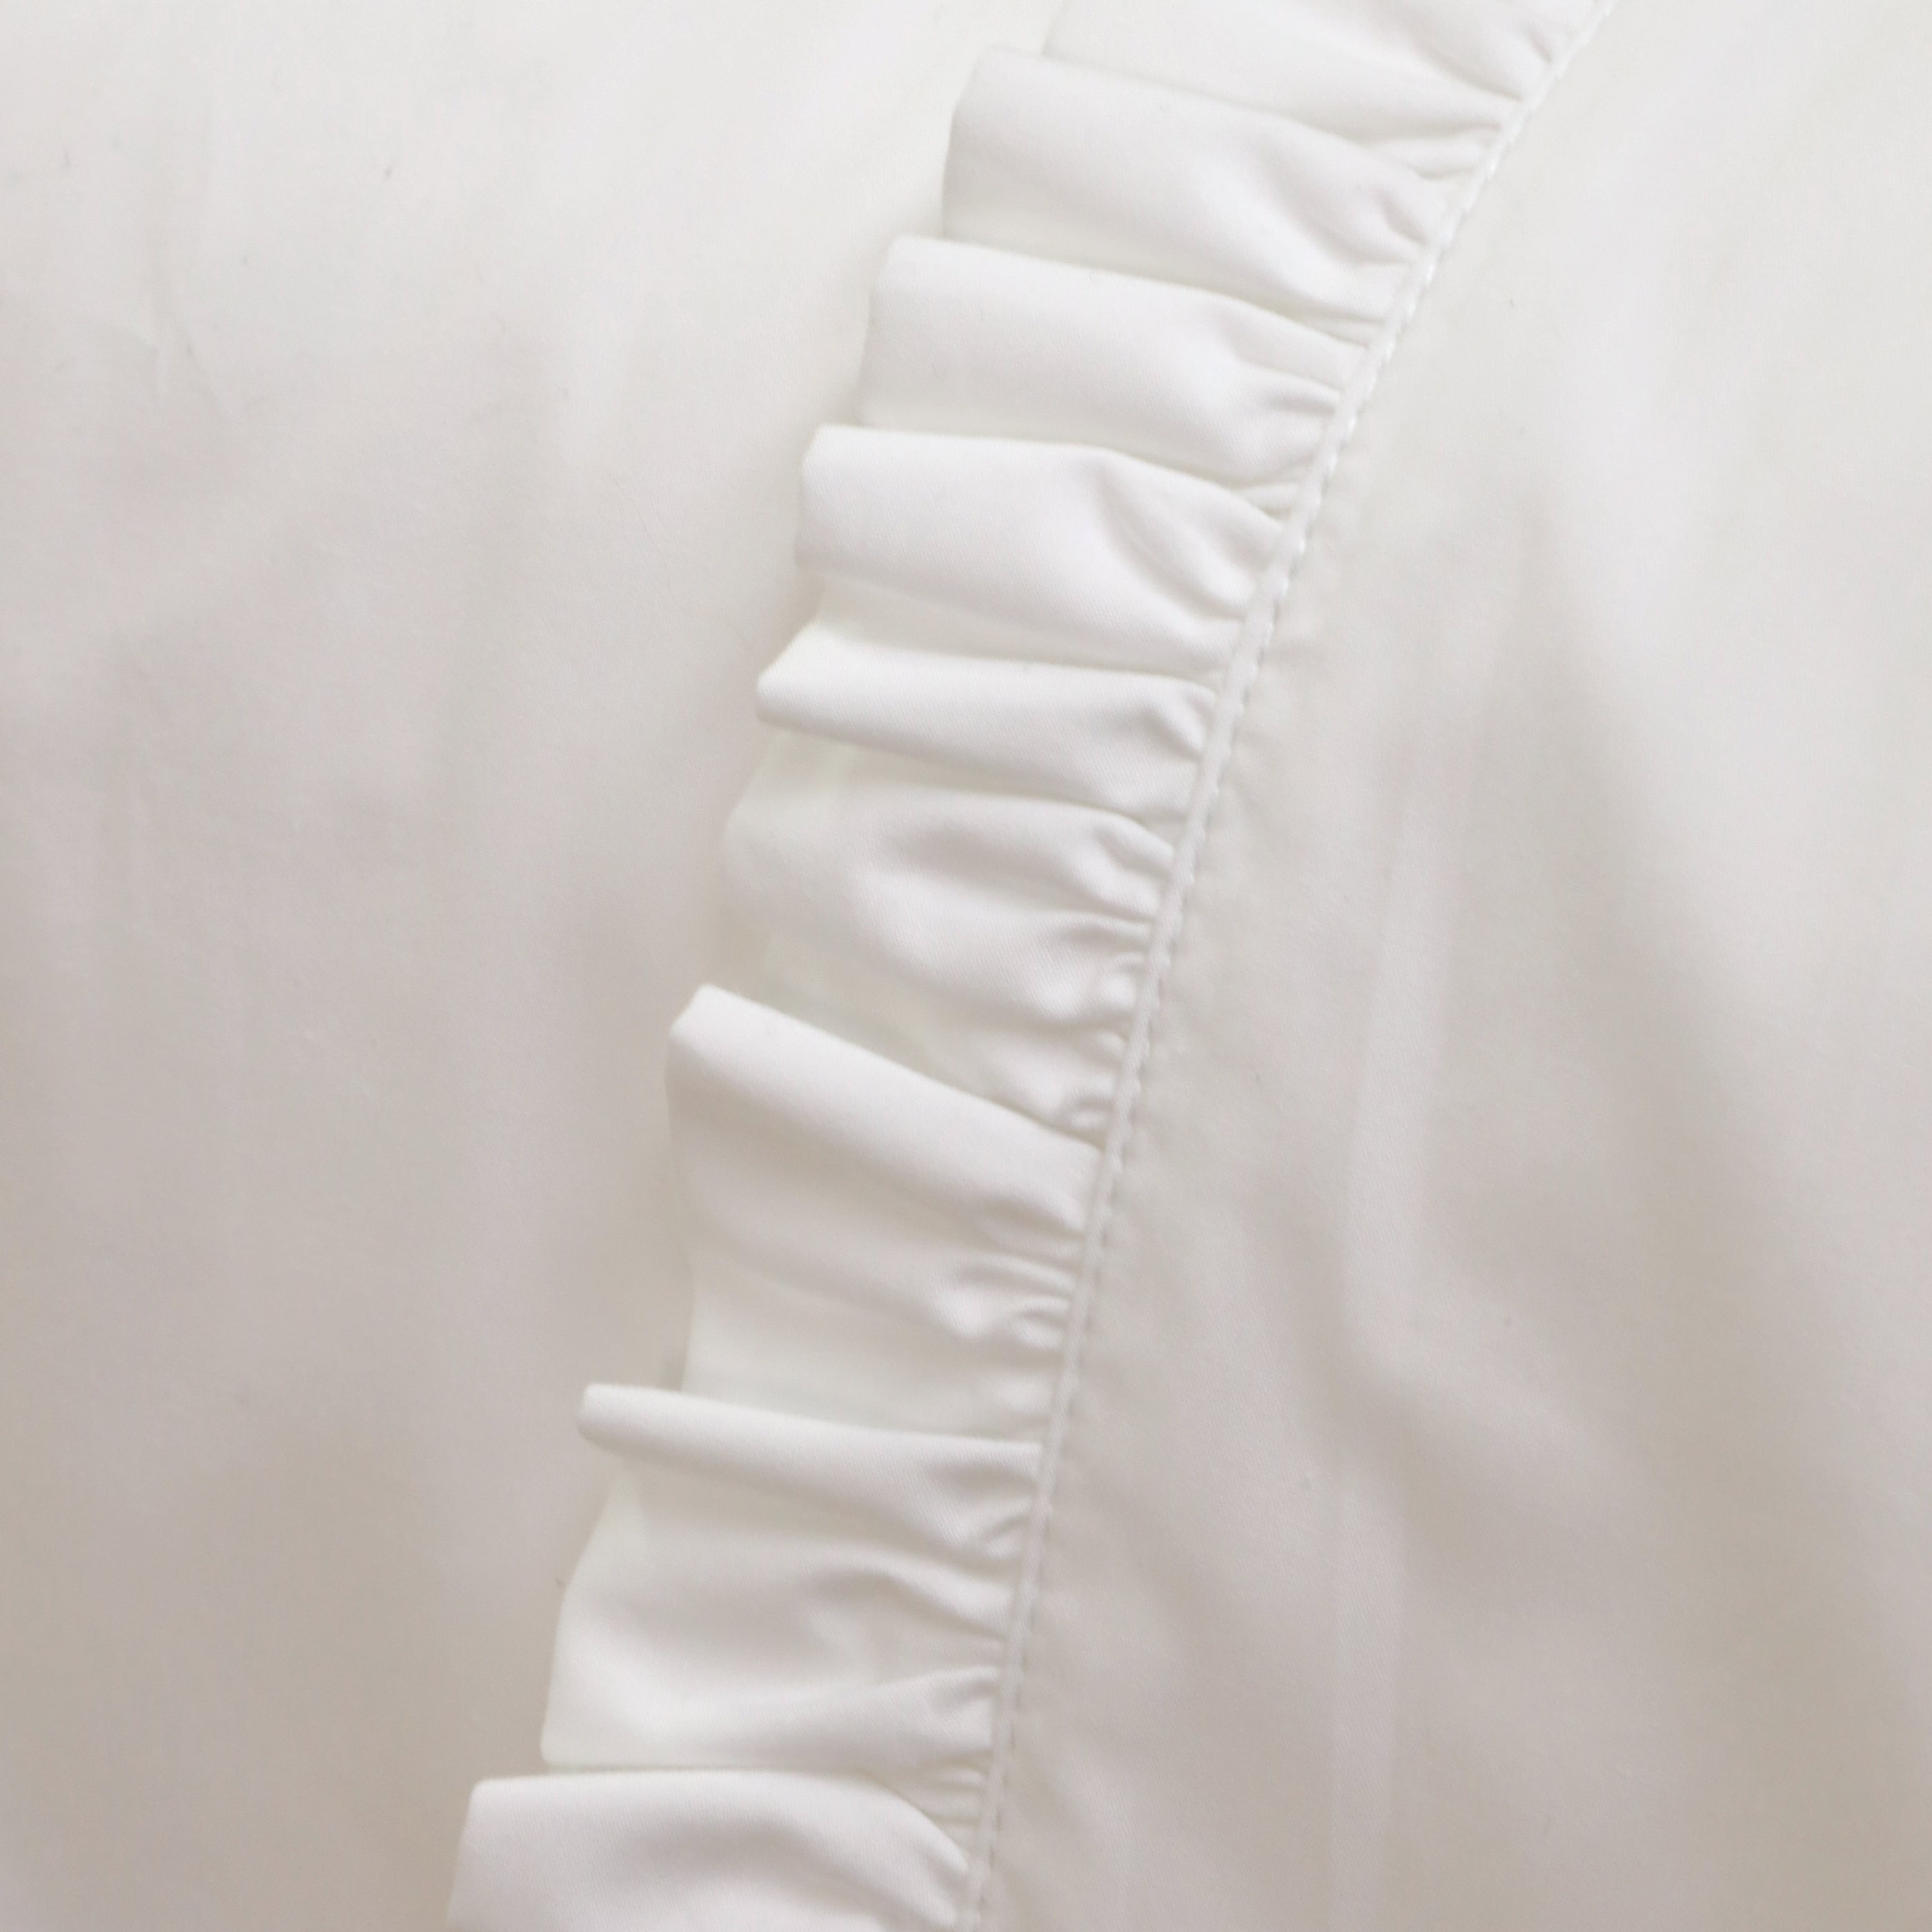 PPAH Audrey Ruffle Cotton Percale Sheet Set - White